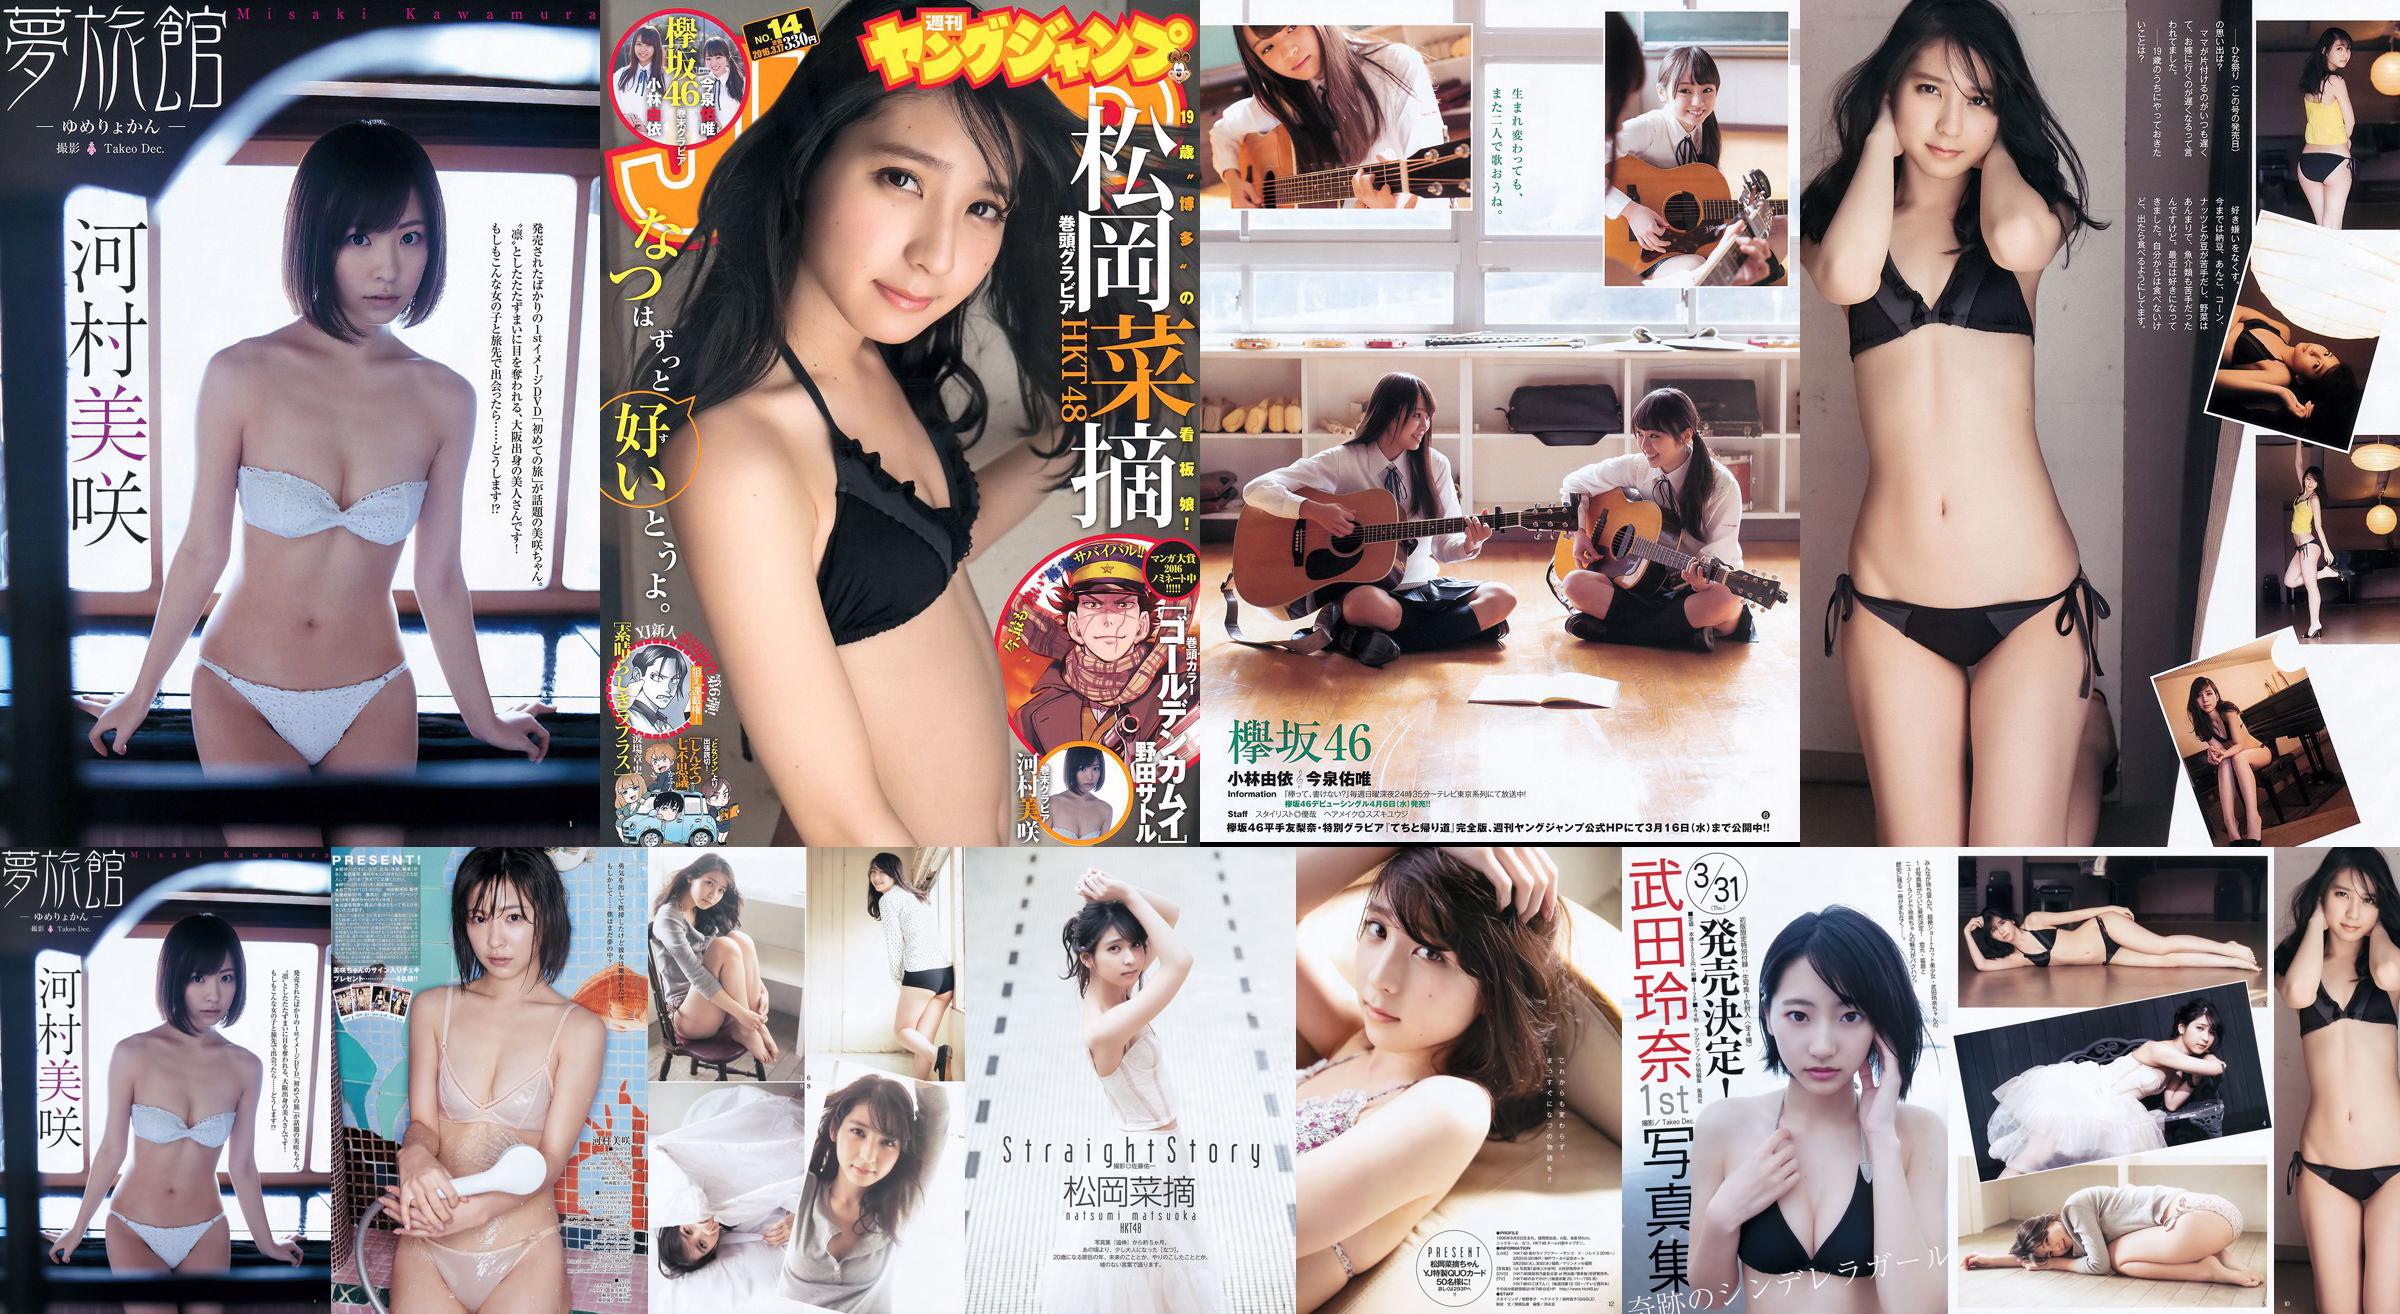 Selecciones de vegetales de Muraoka Yui Kobayashi Yui Imaizumi Misaki Kawamura [Salto joven semanal] Revista fotográfica n. ° 14 de 2016 No.3adb22 Página 9